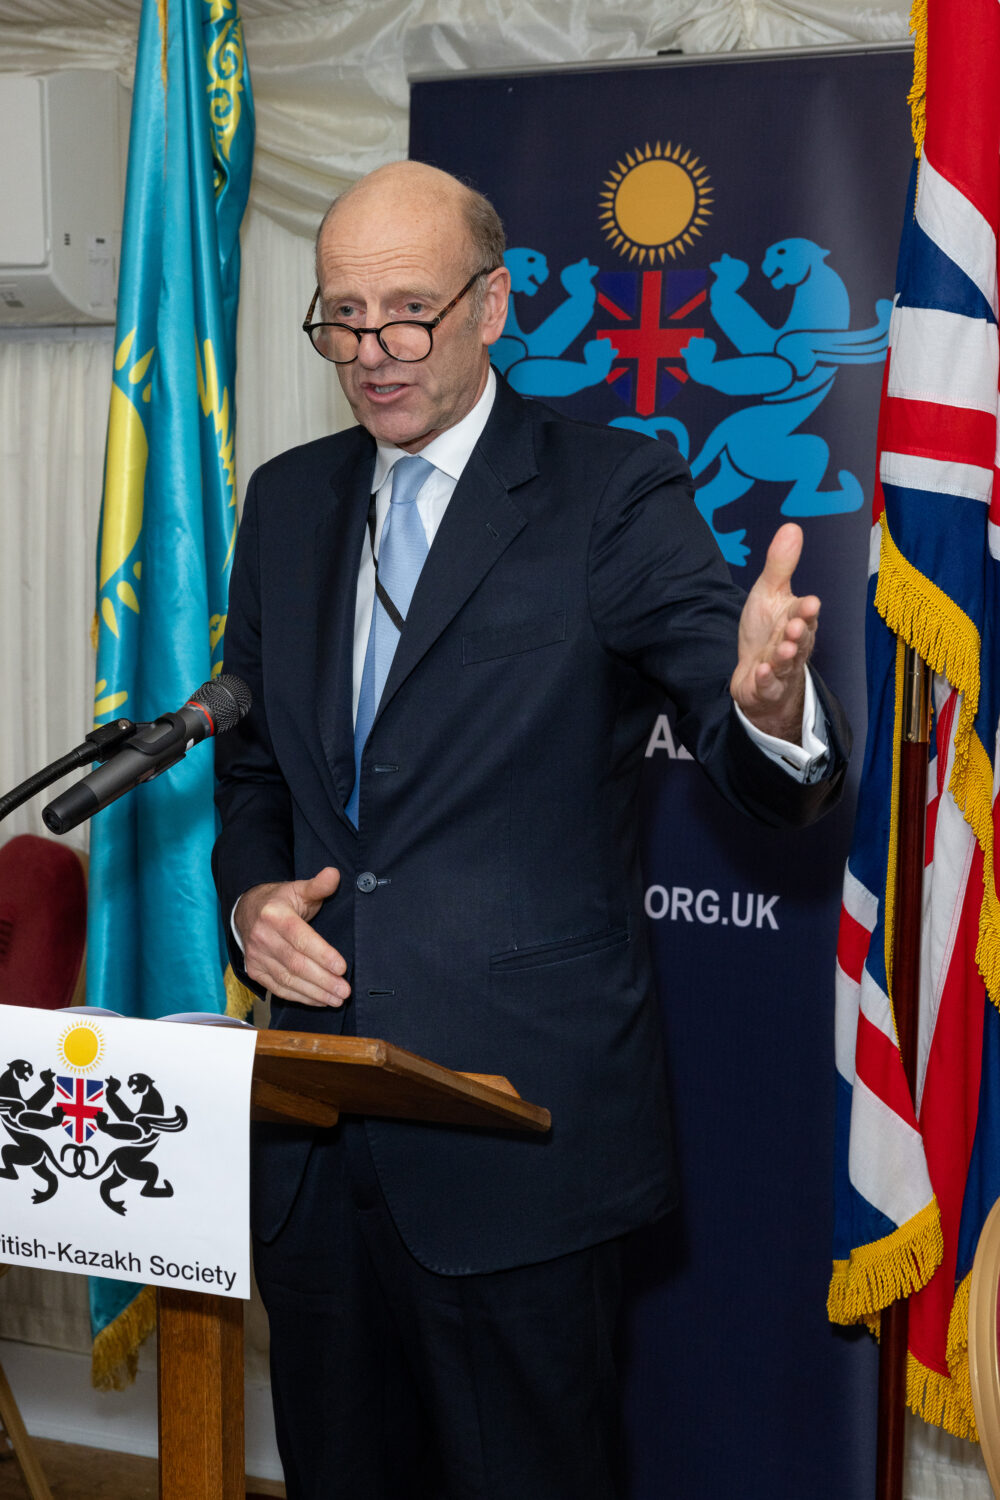 Rupert Goodman, Chairman of the British-Kazakh Society, addresses the guests